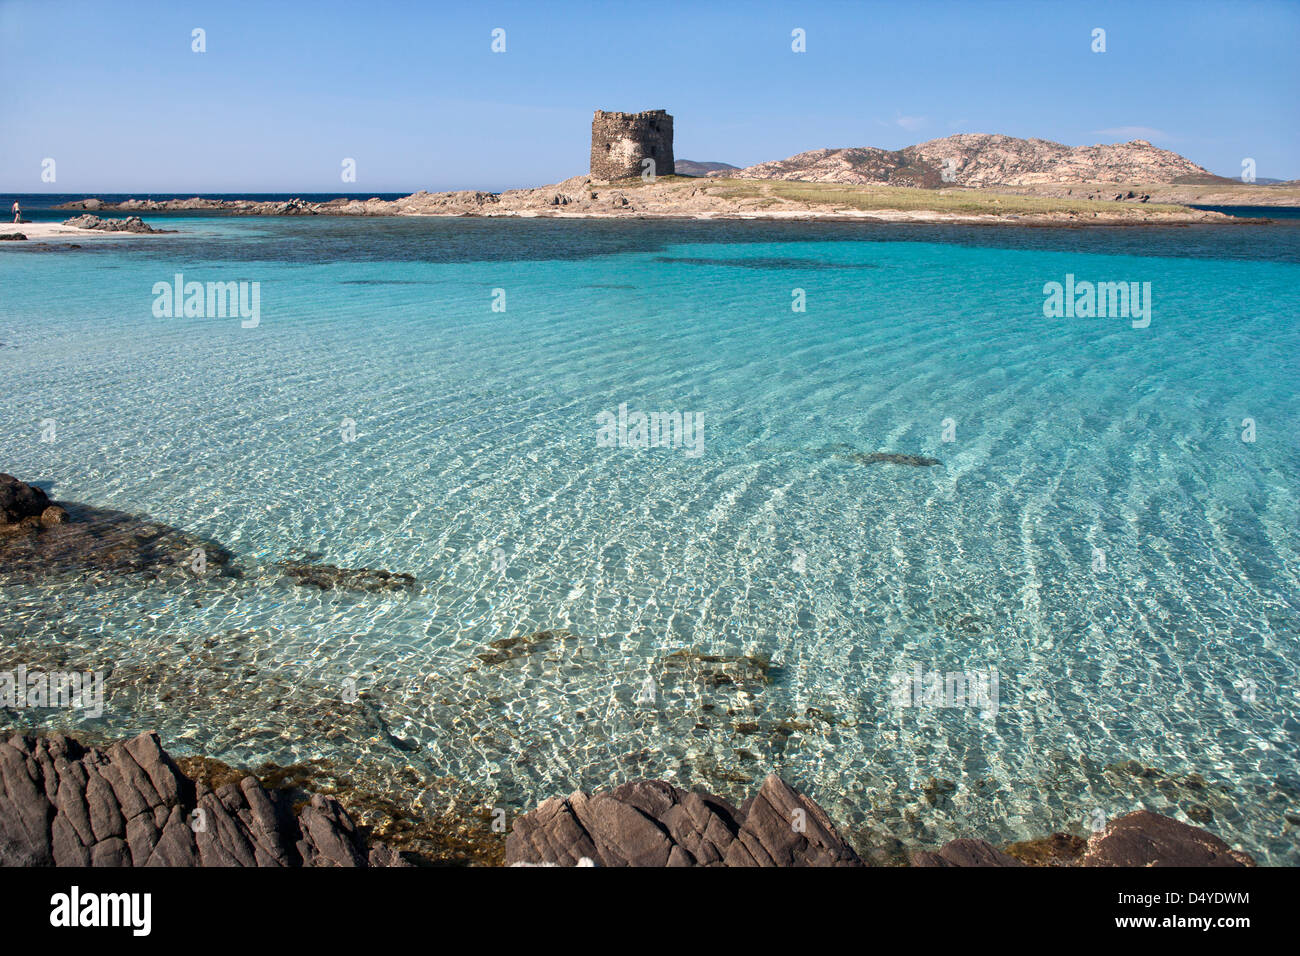 Spiaggia la pelosa hi-res stock photography and images - Alamy